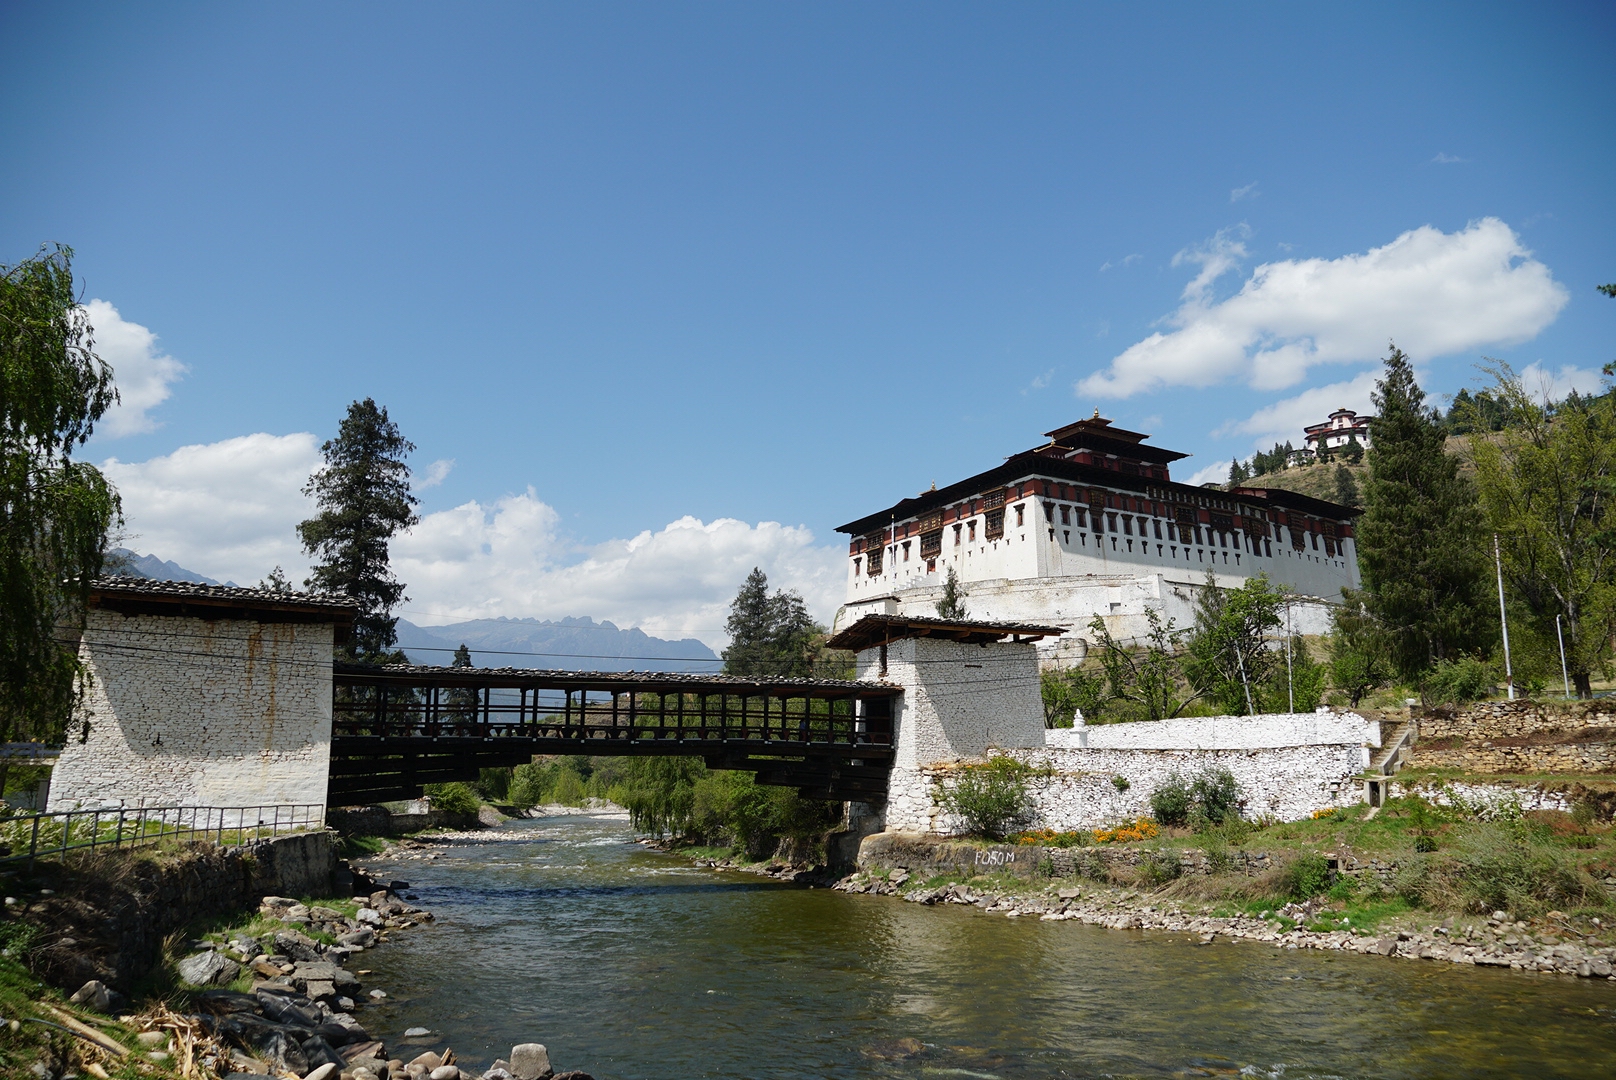 Festivals in Bhutan 